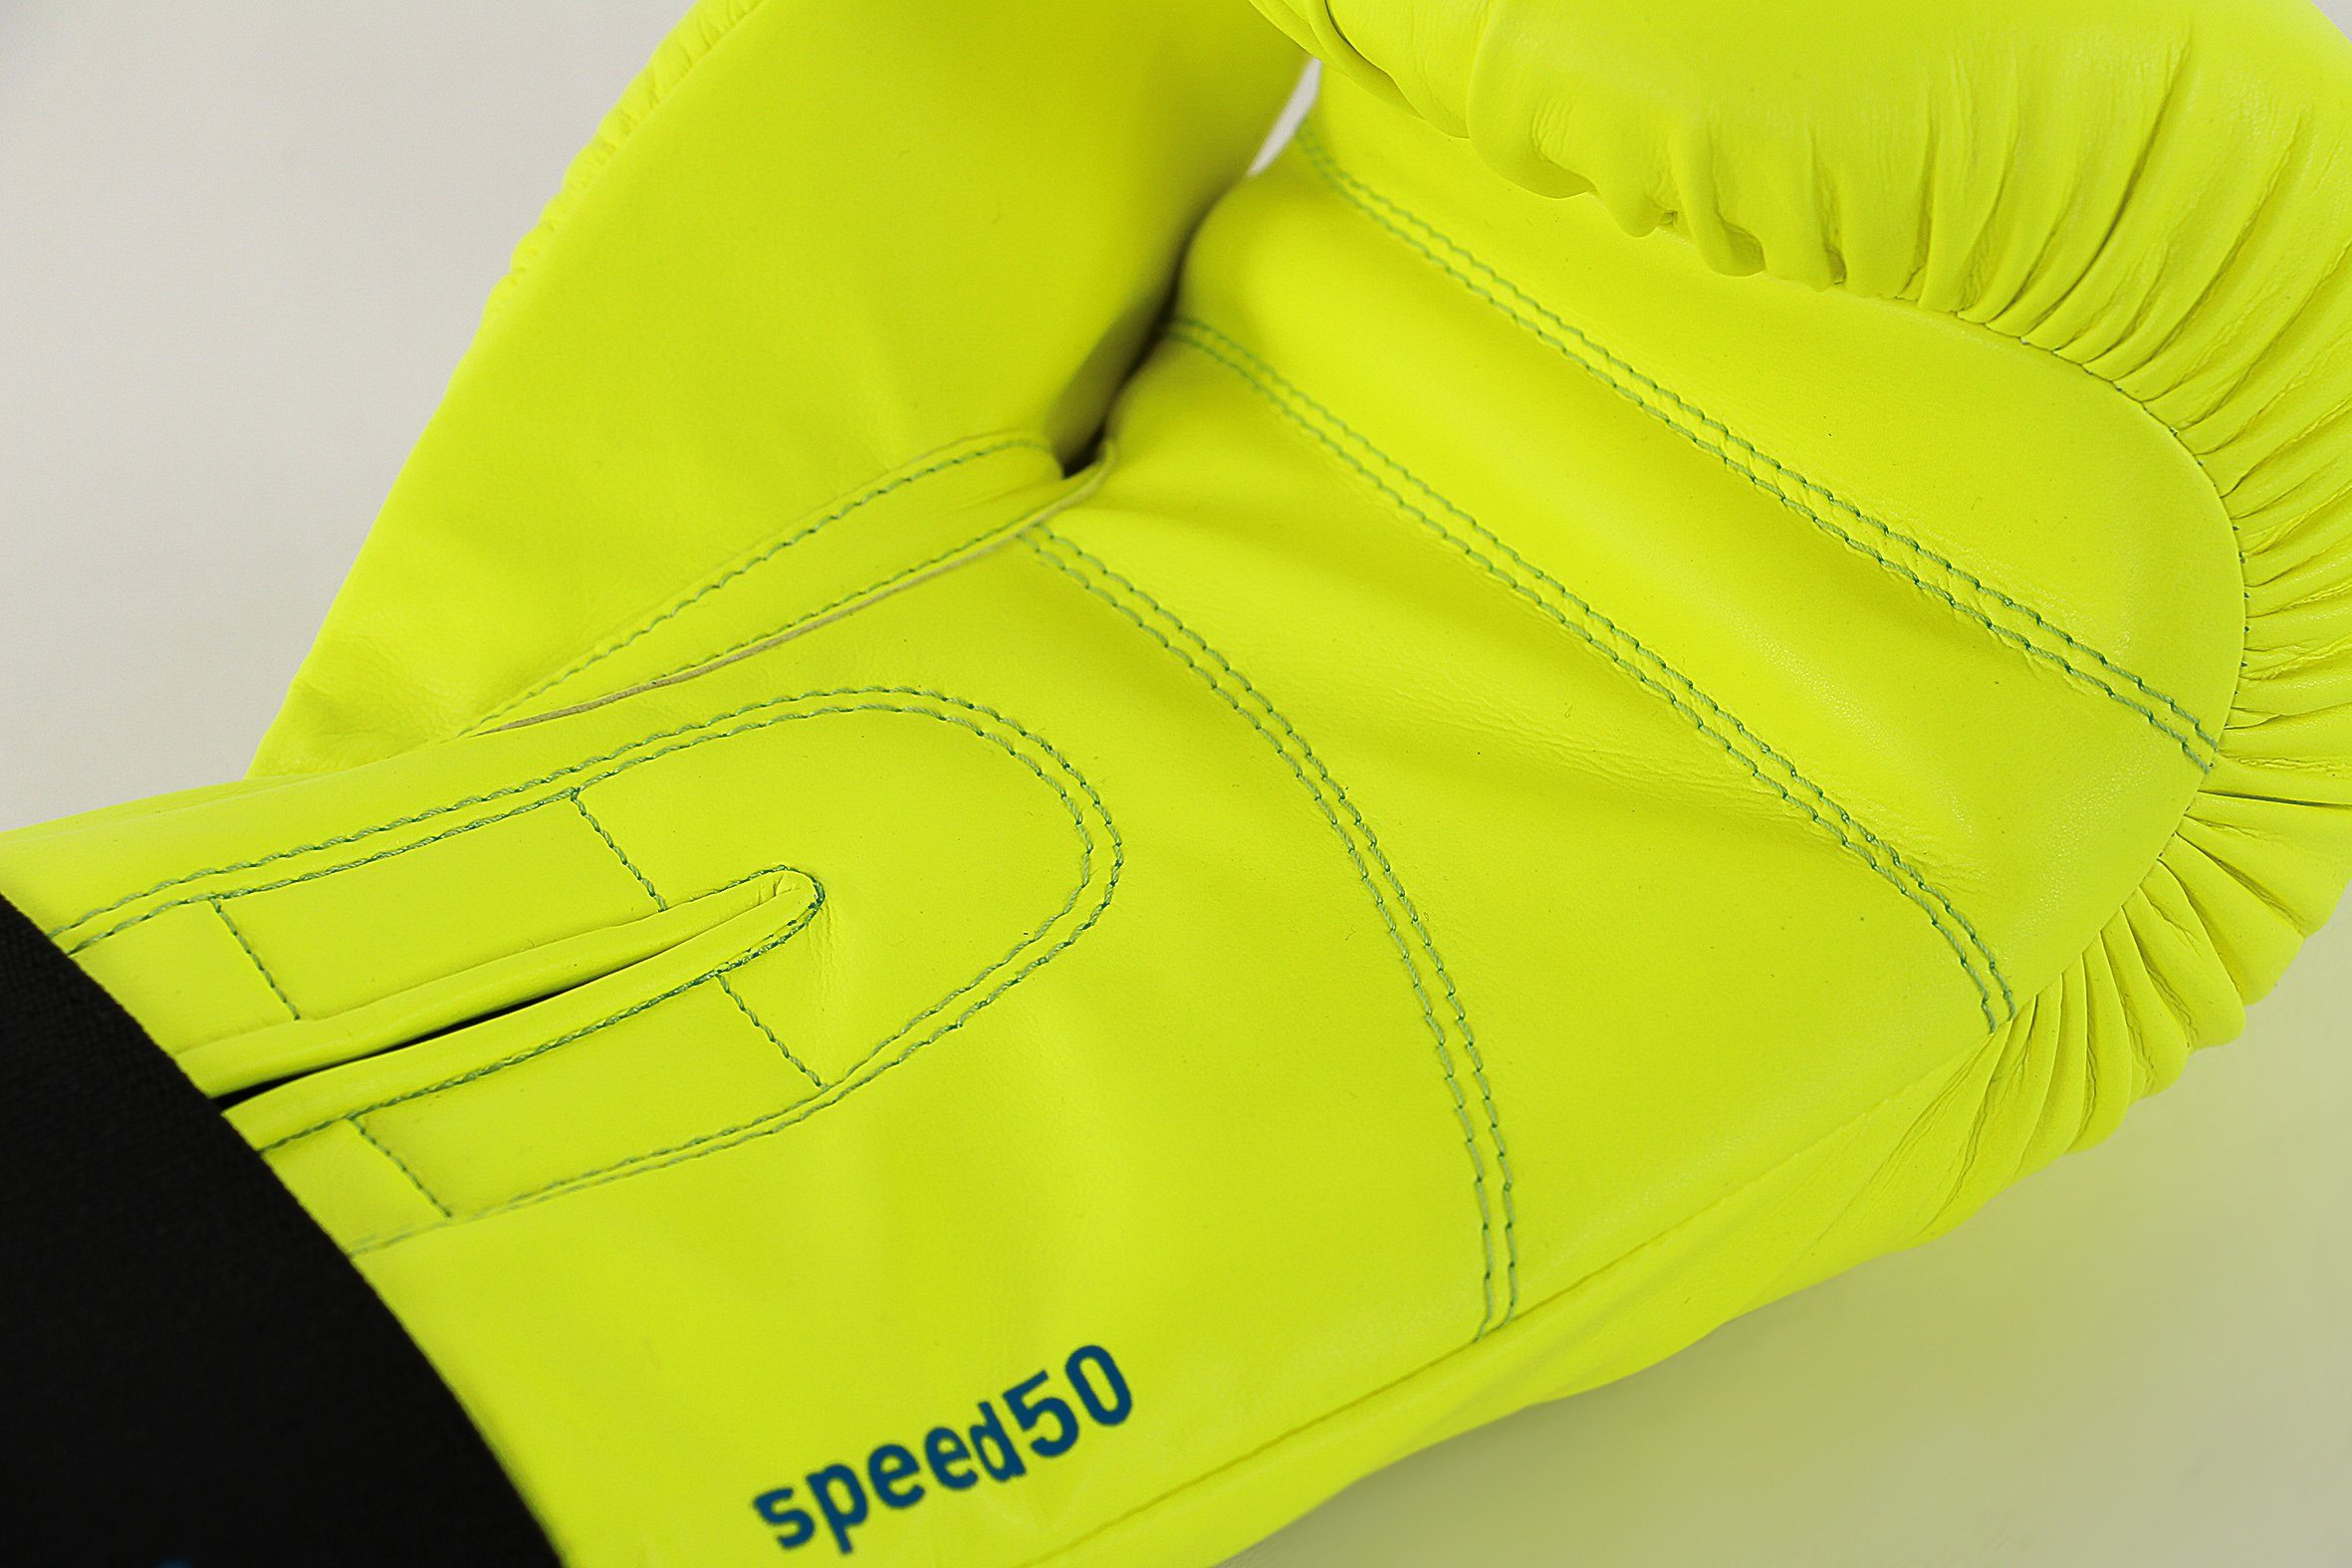 Performance Speed adidas Boxhandschuhe blau/gelb 50